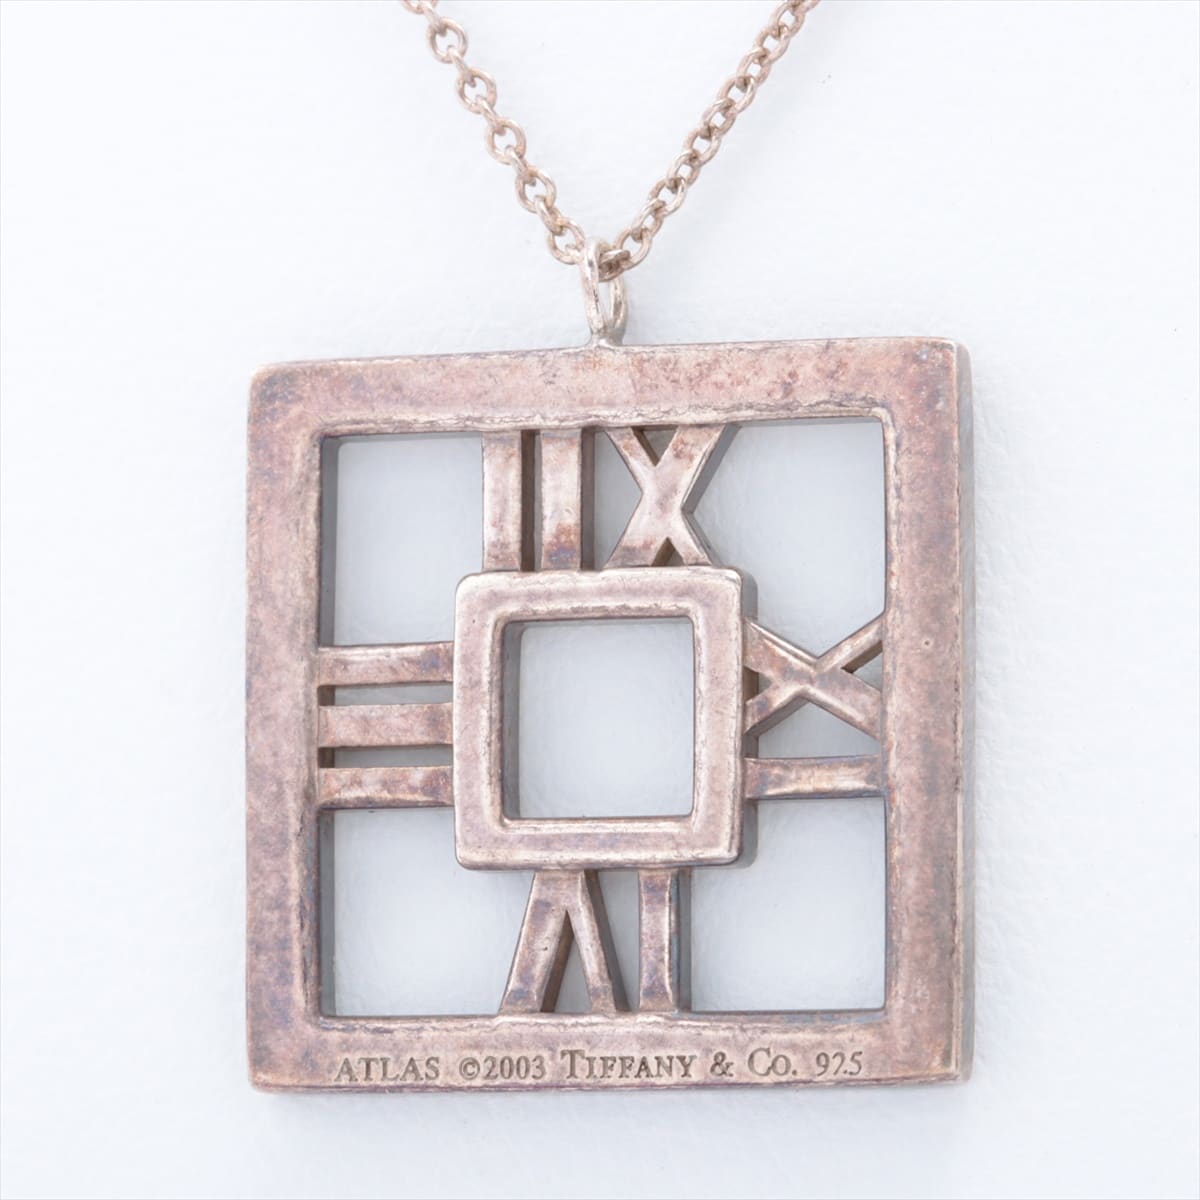 Tiffany Atlas open square Necklace 925 4.4g Silver